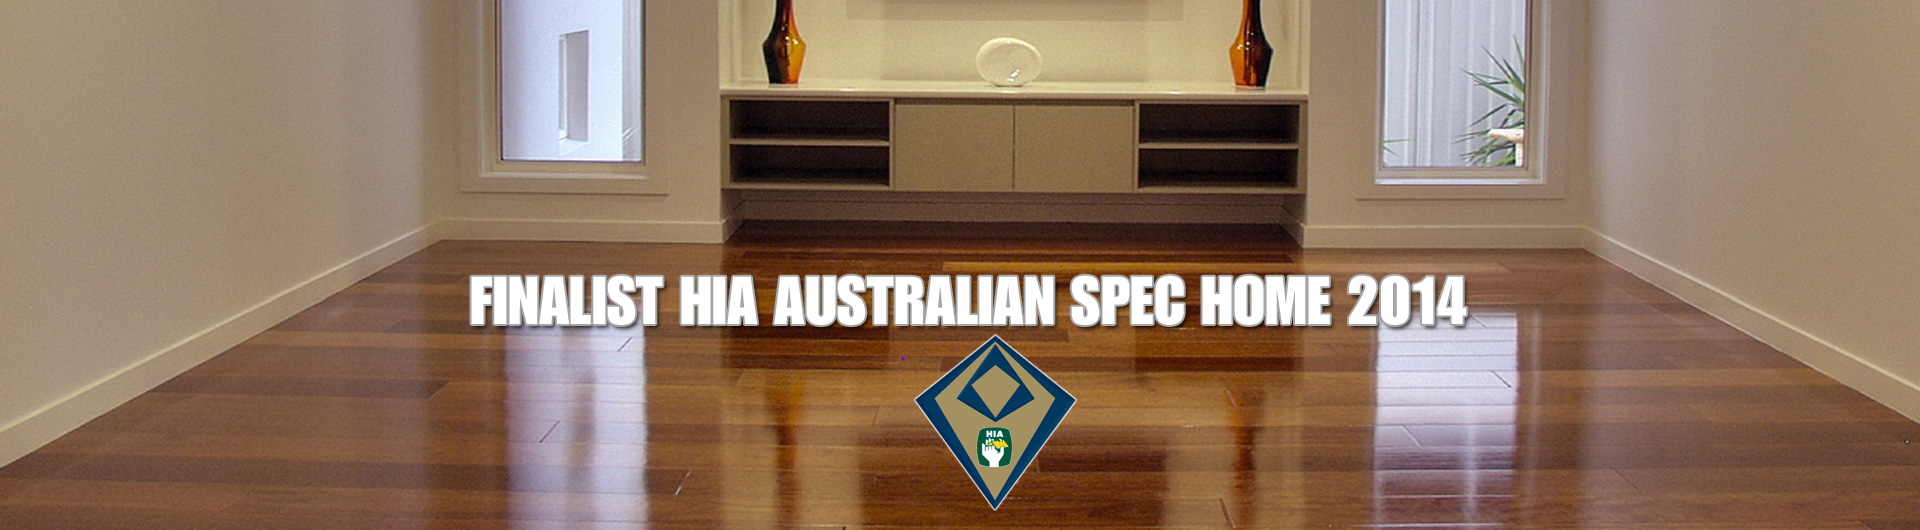 FINALIST HIA AUSTRALIAN SPEC HOME 2014